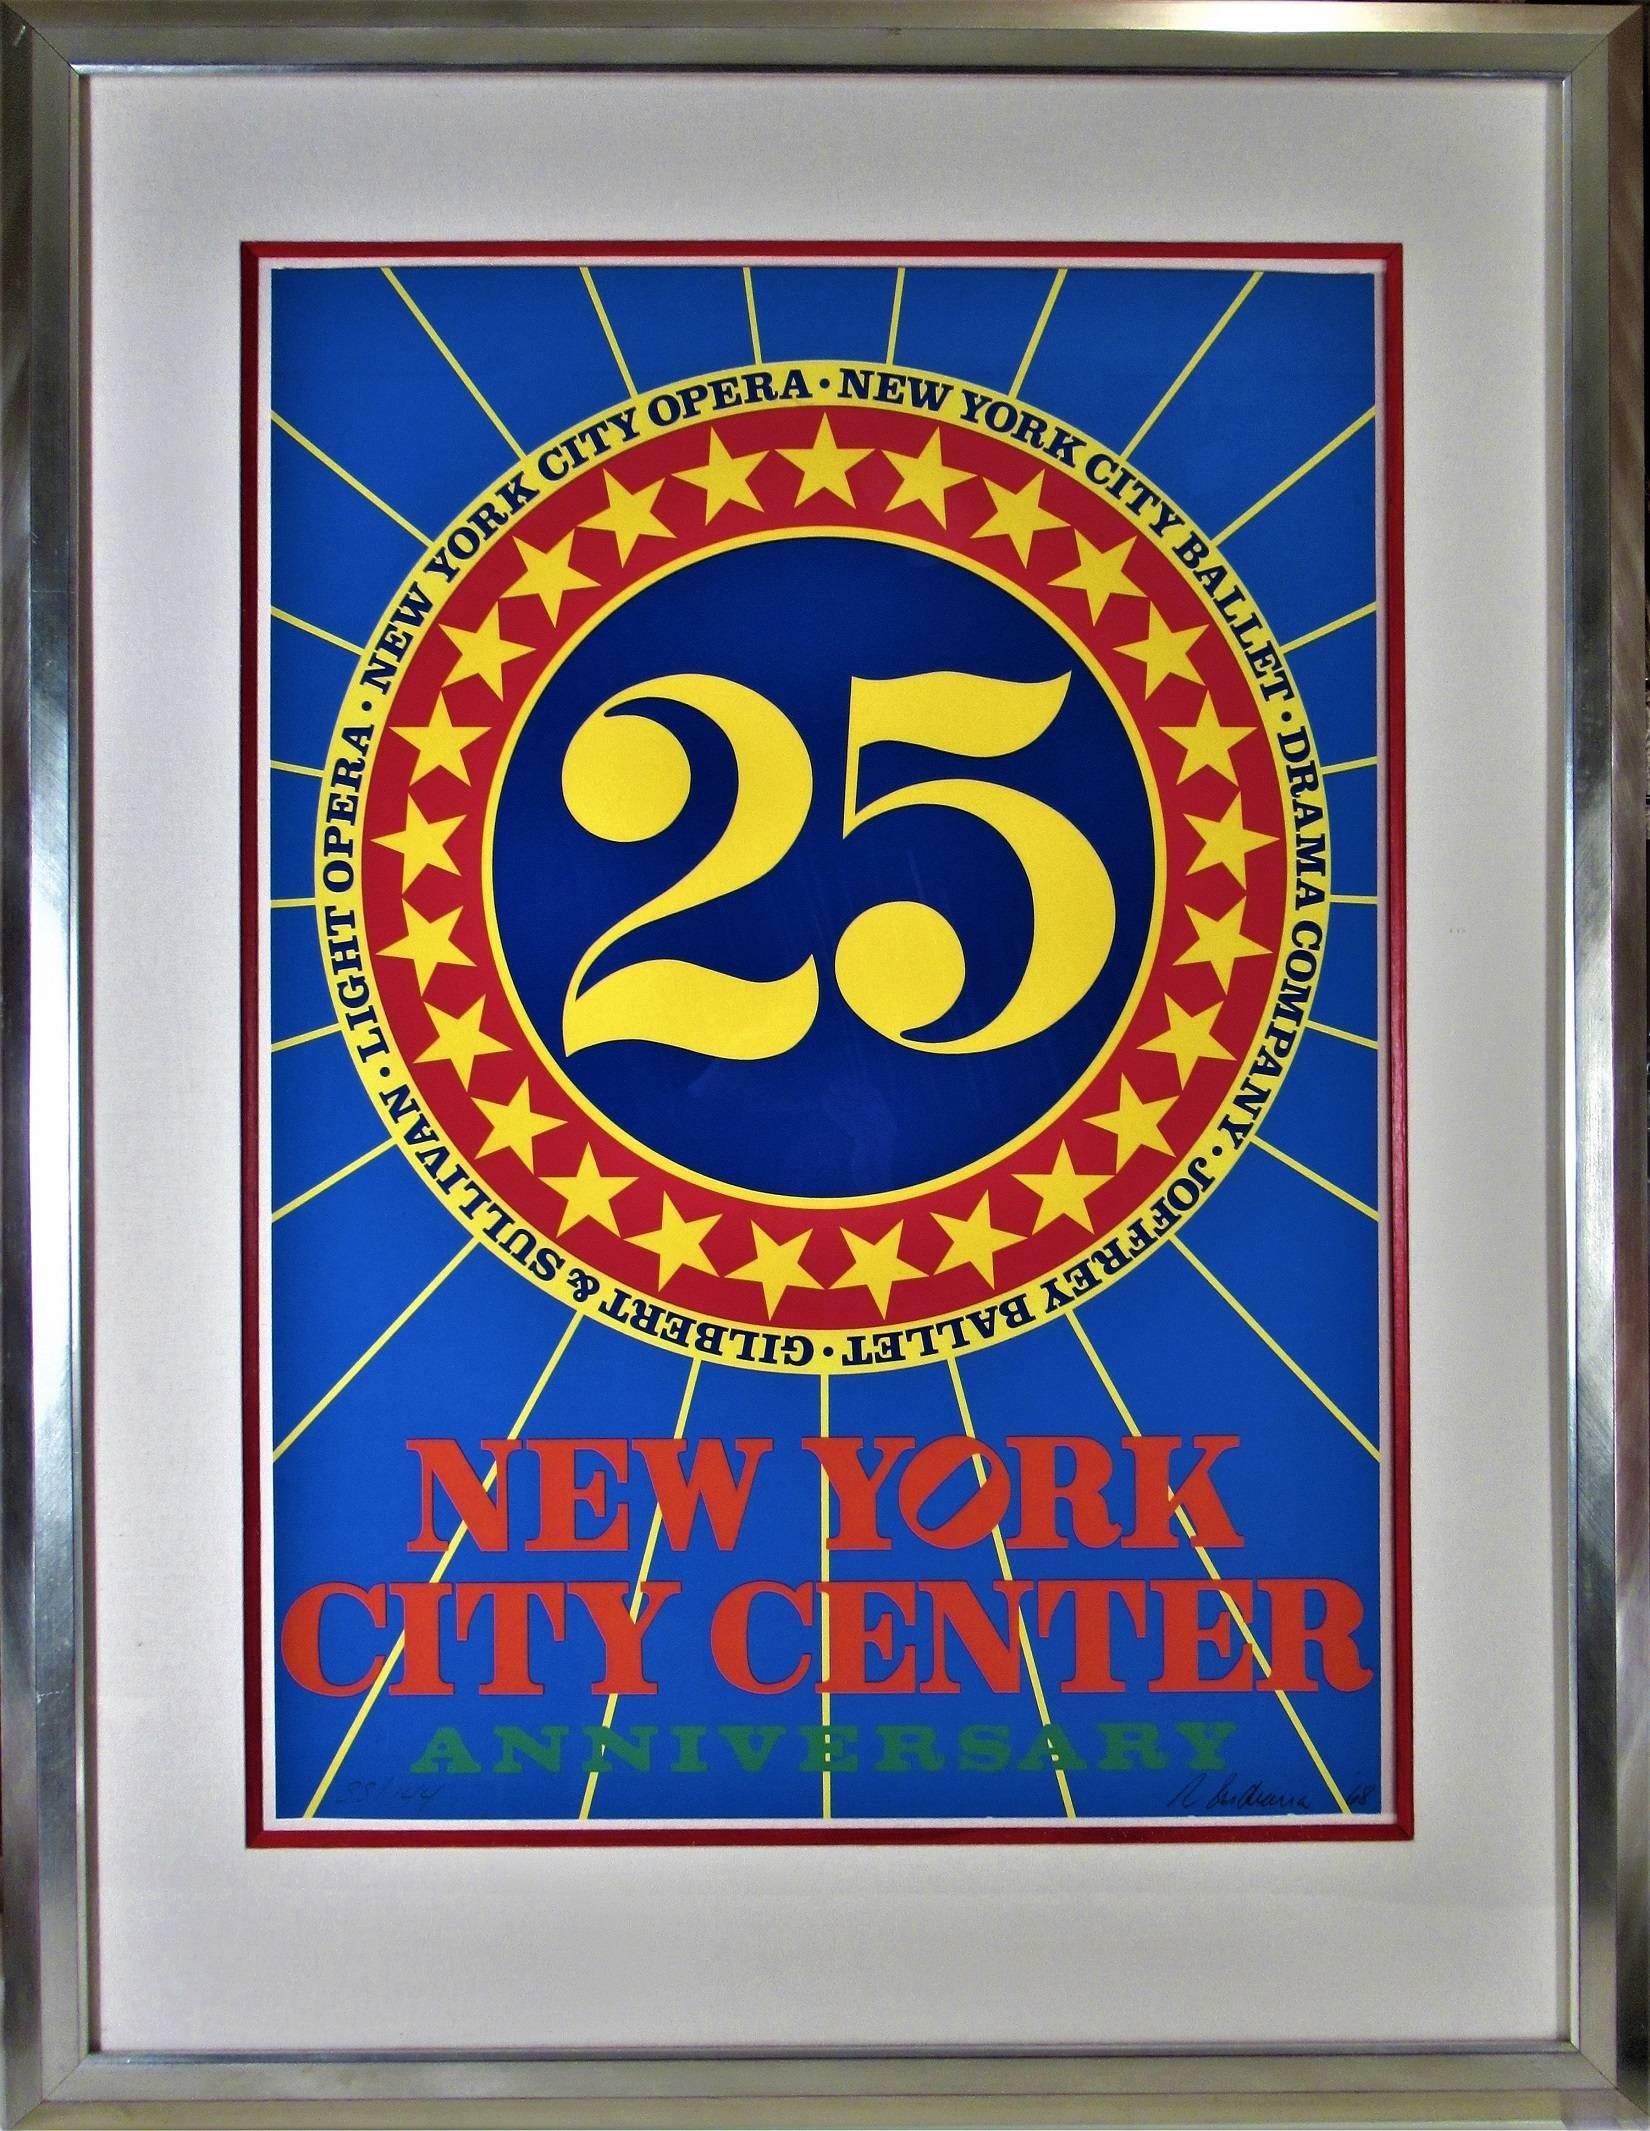 Robert Indiana Abstract Print - New York City Center 25th Anniversary